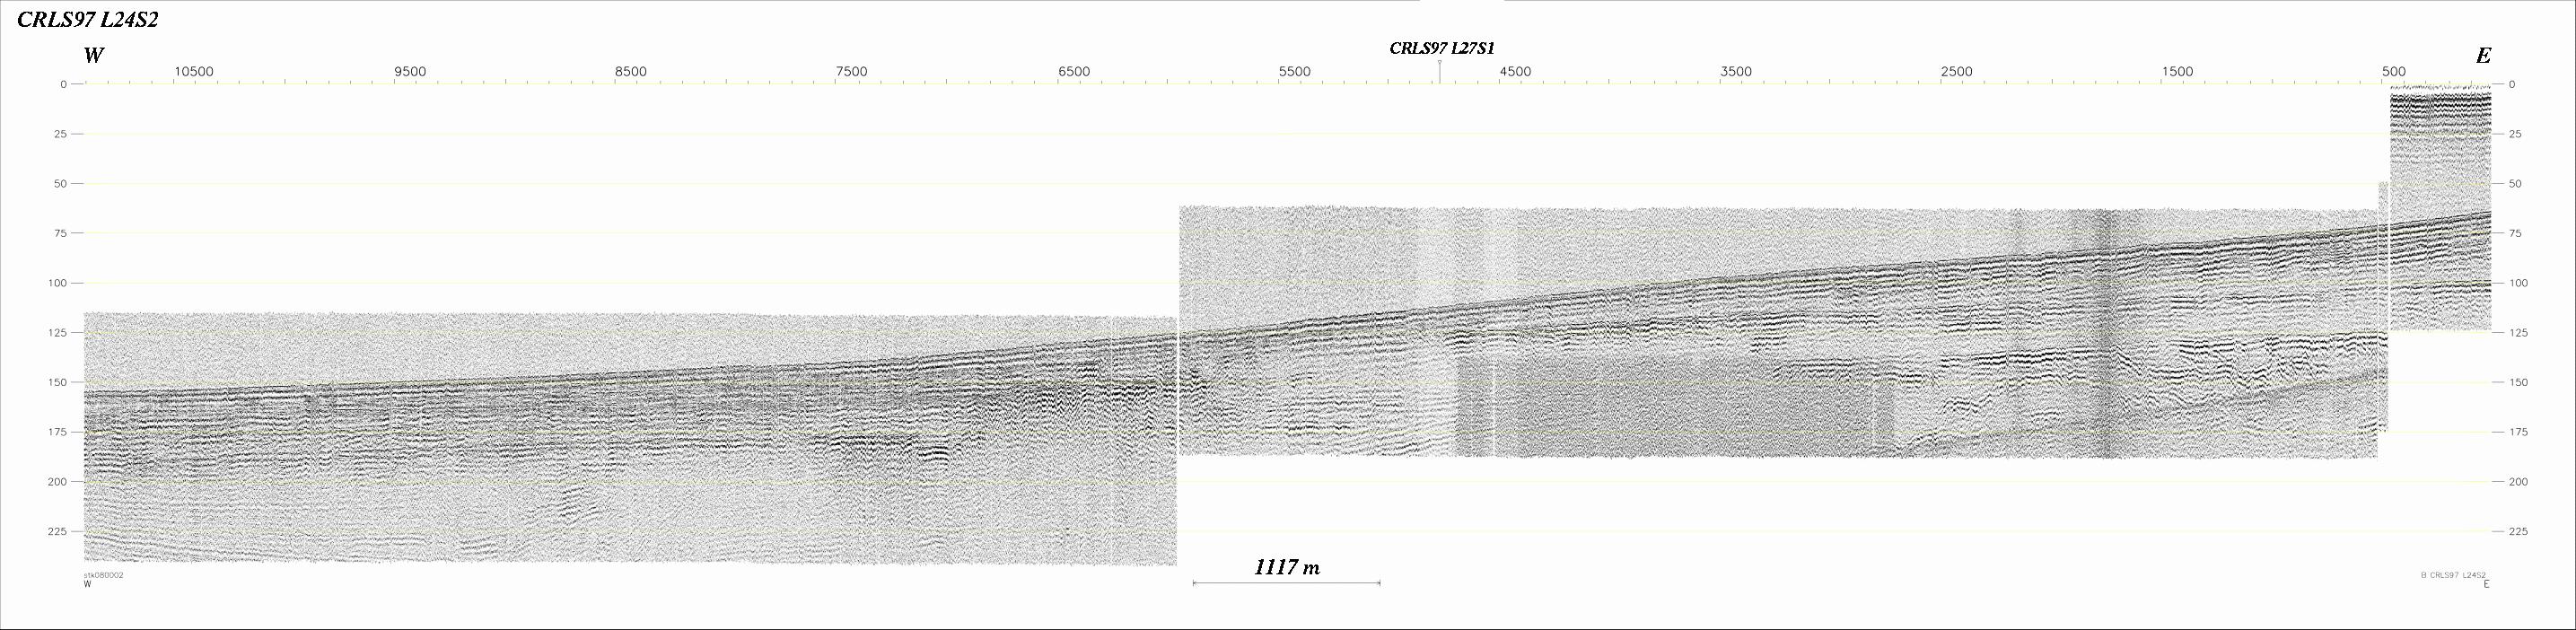 Seismic Reflection Profile Line No.: L24s2 (368340 bytes)